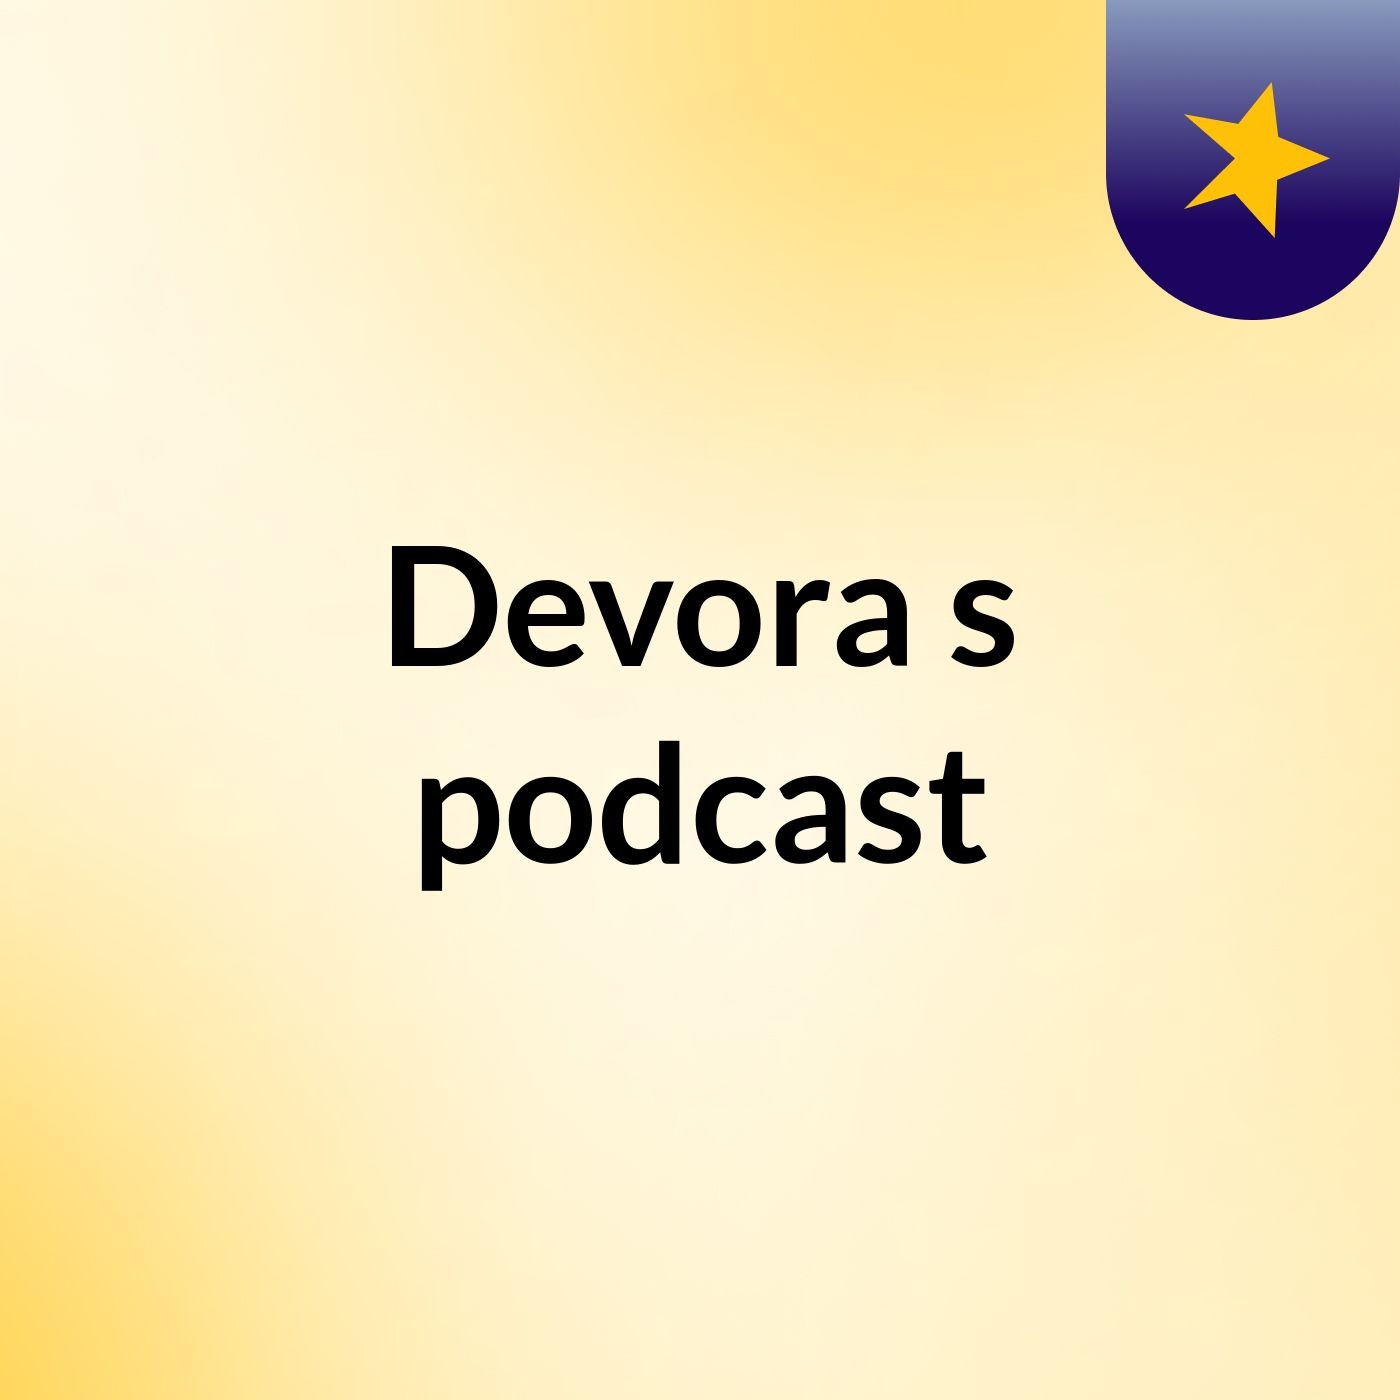 Episode 5 - Devora's podcast